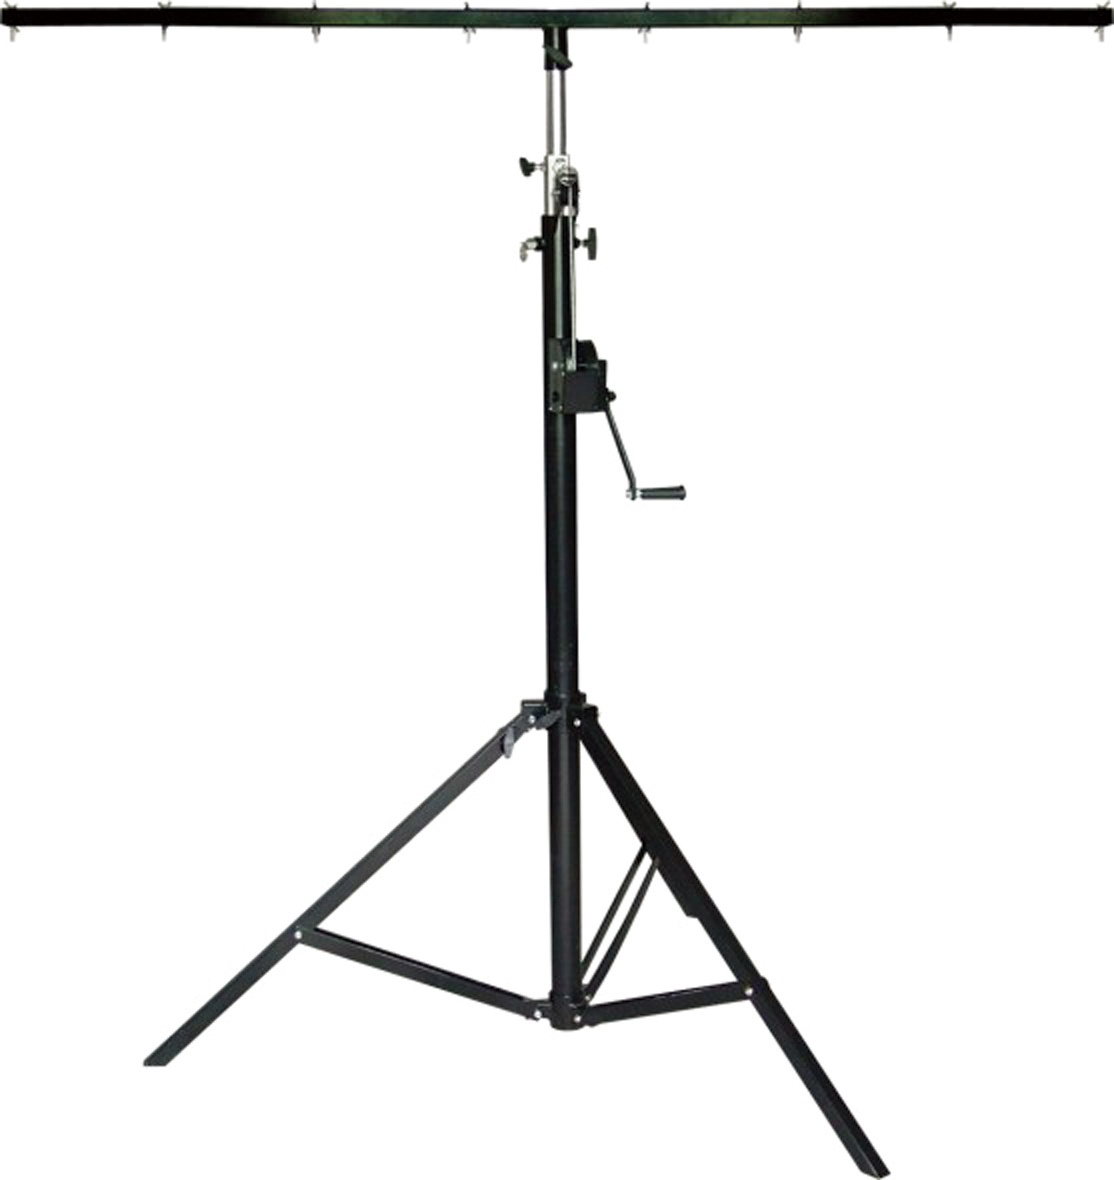 OLA-H400 single stand